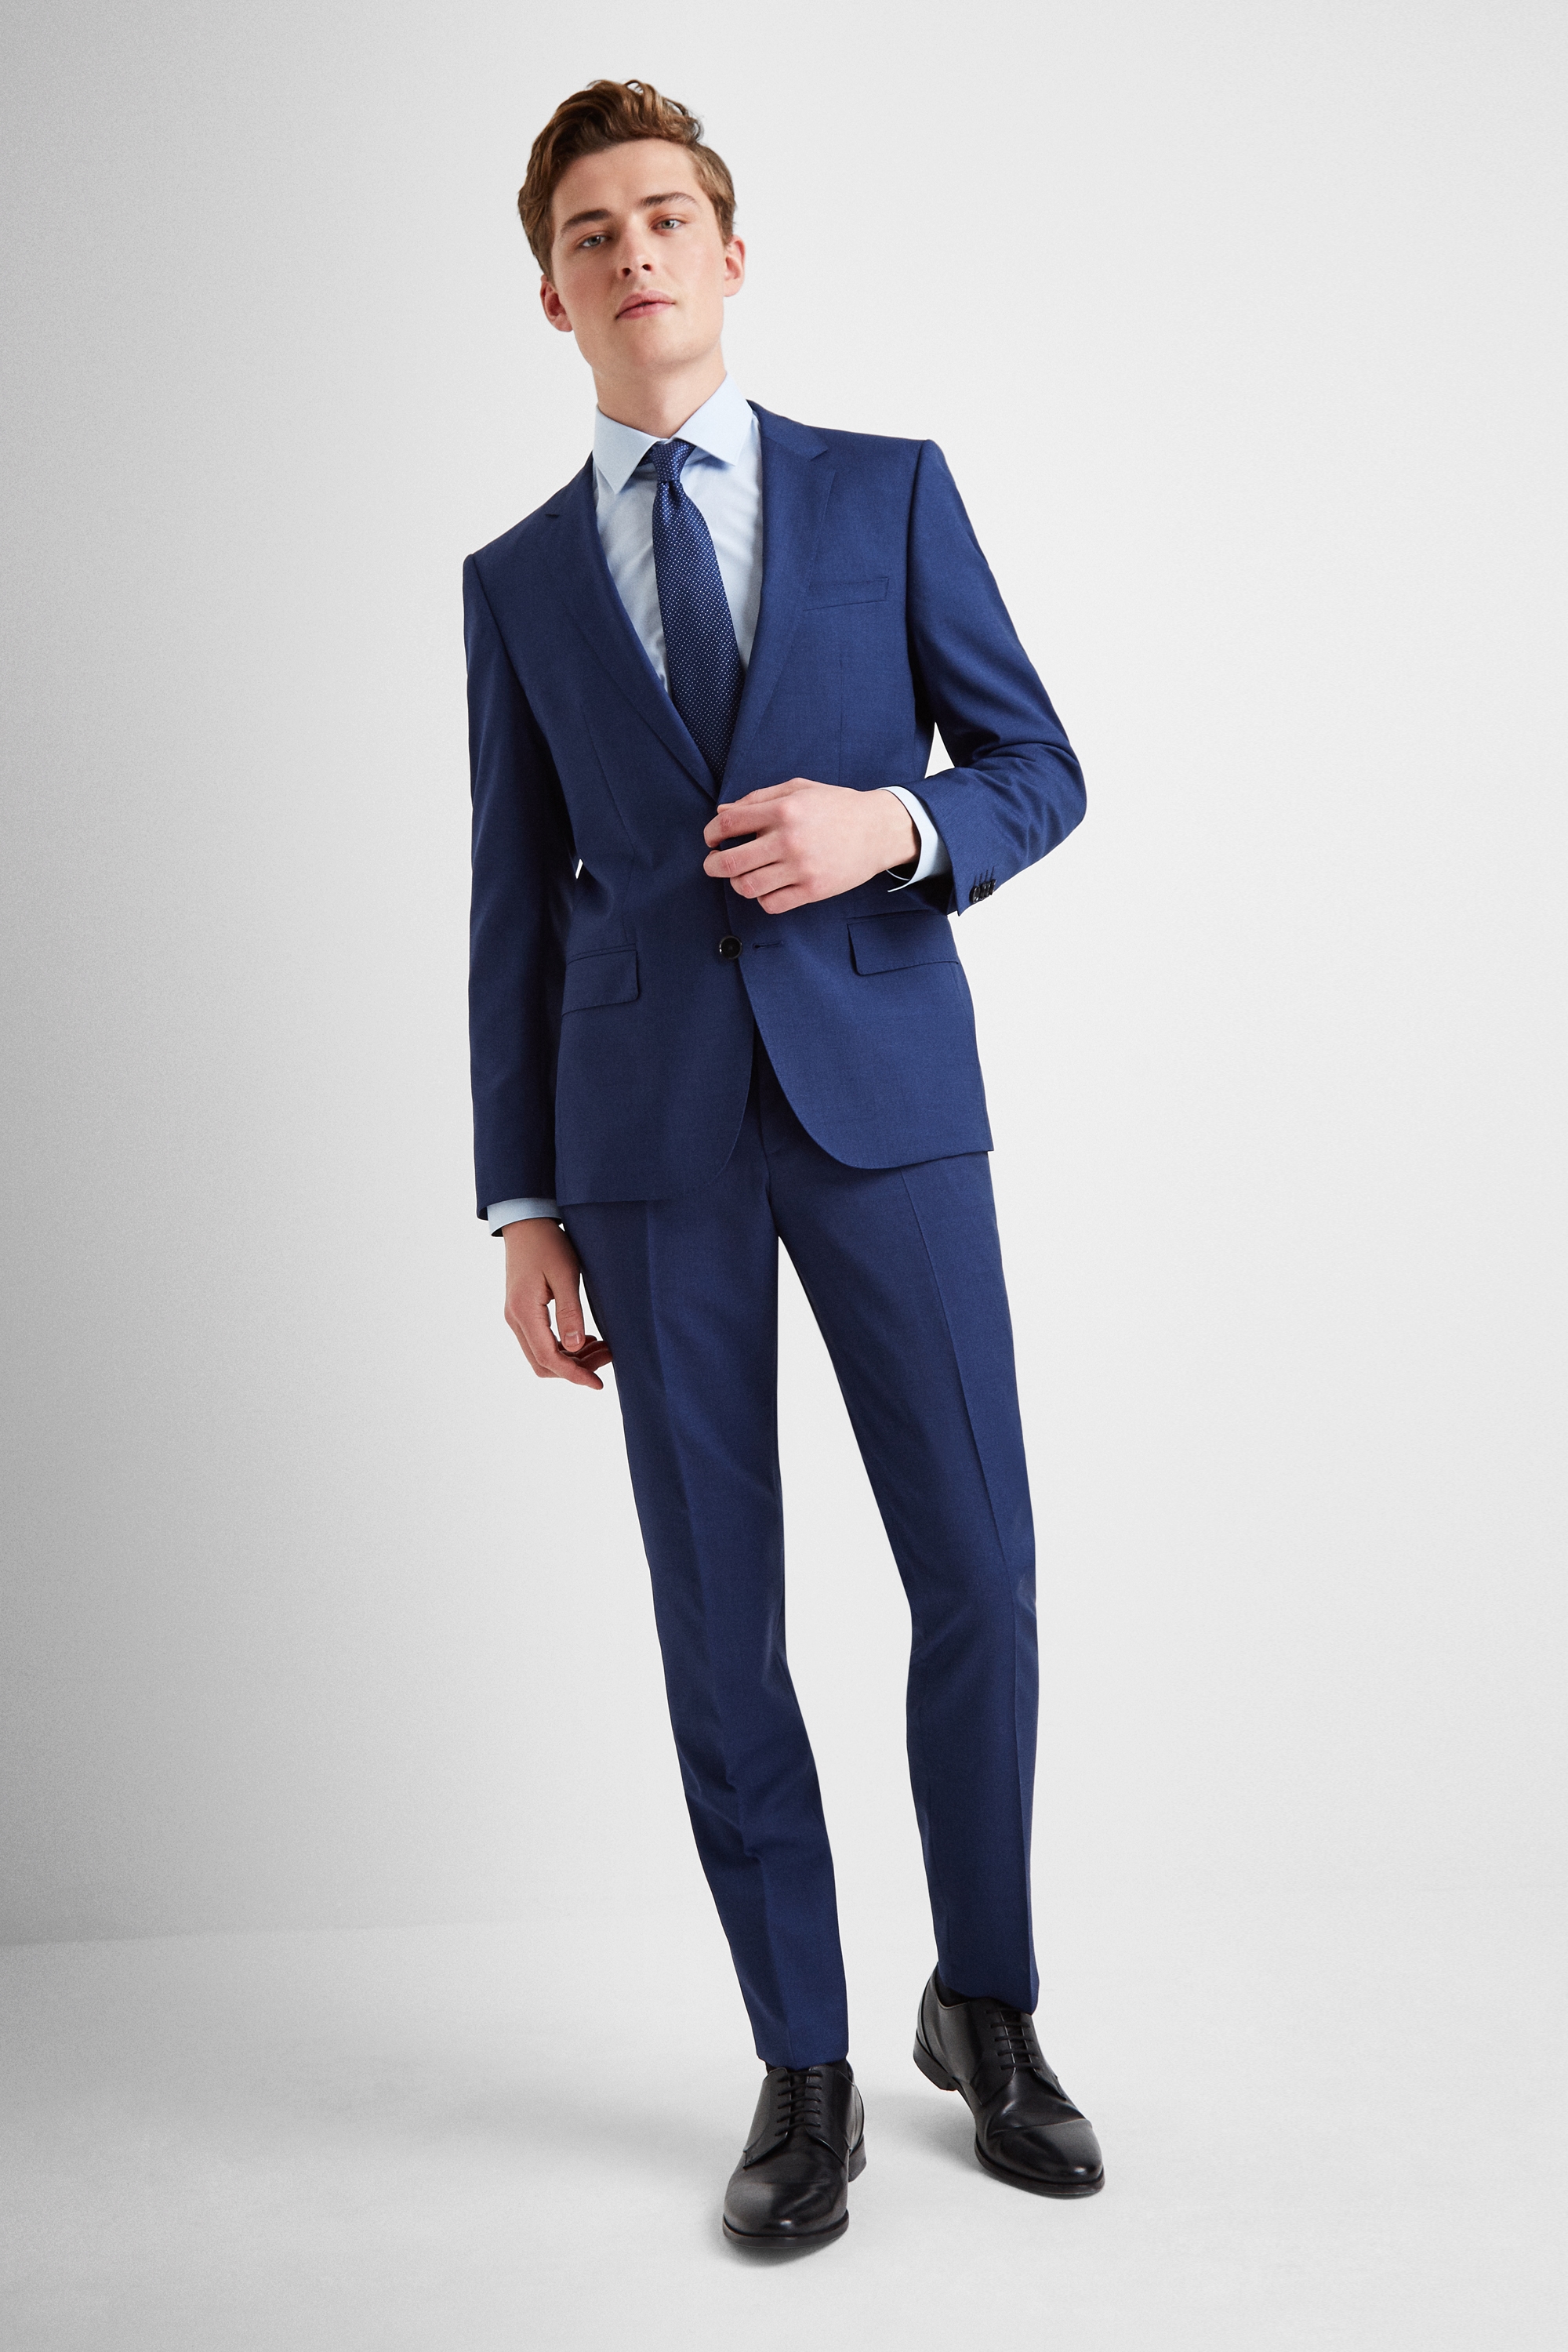 hugo boss blue suit